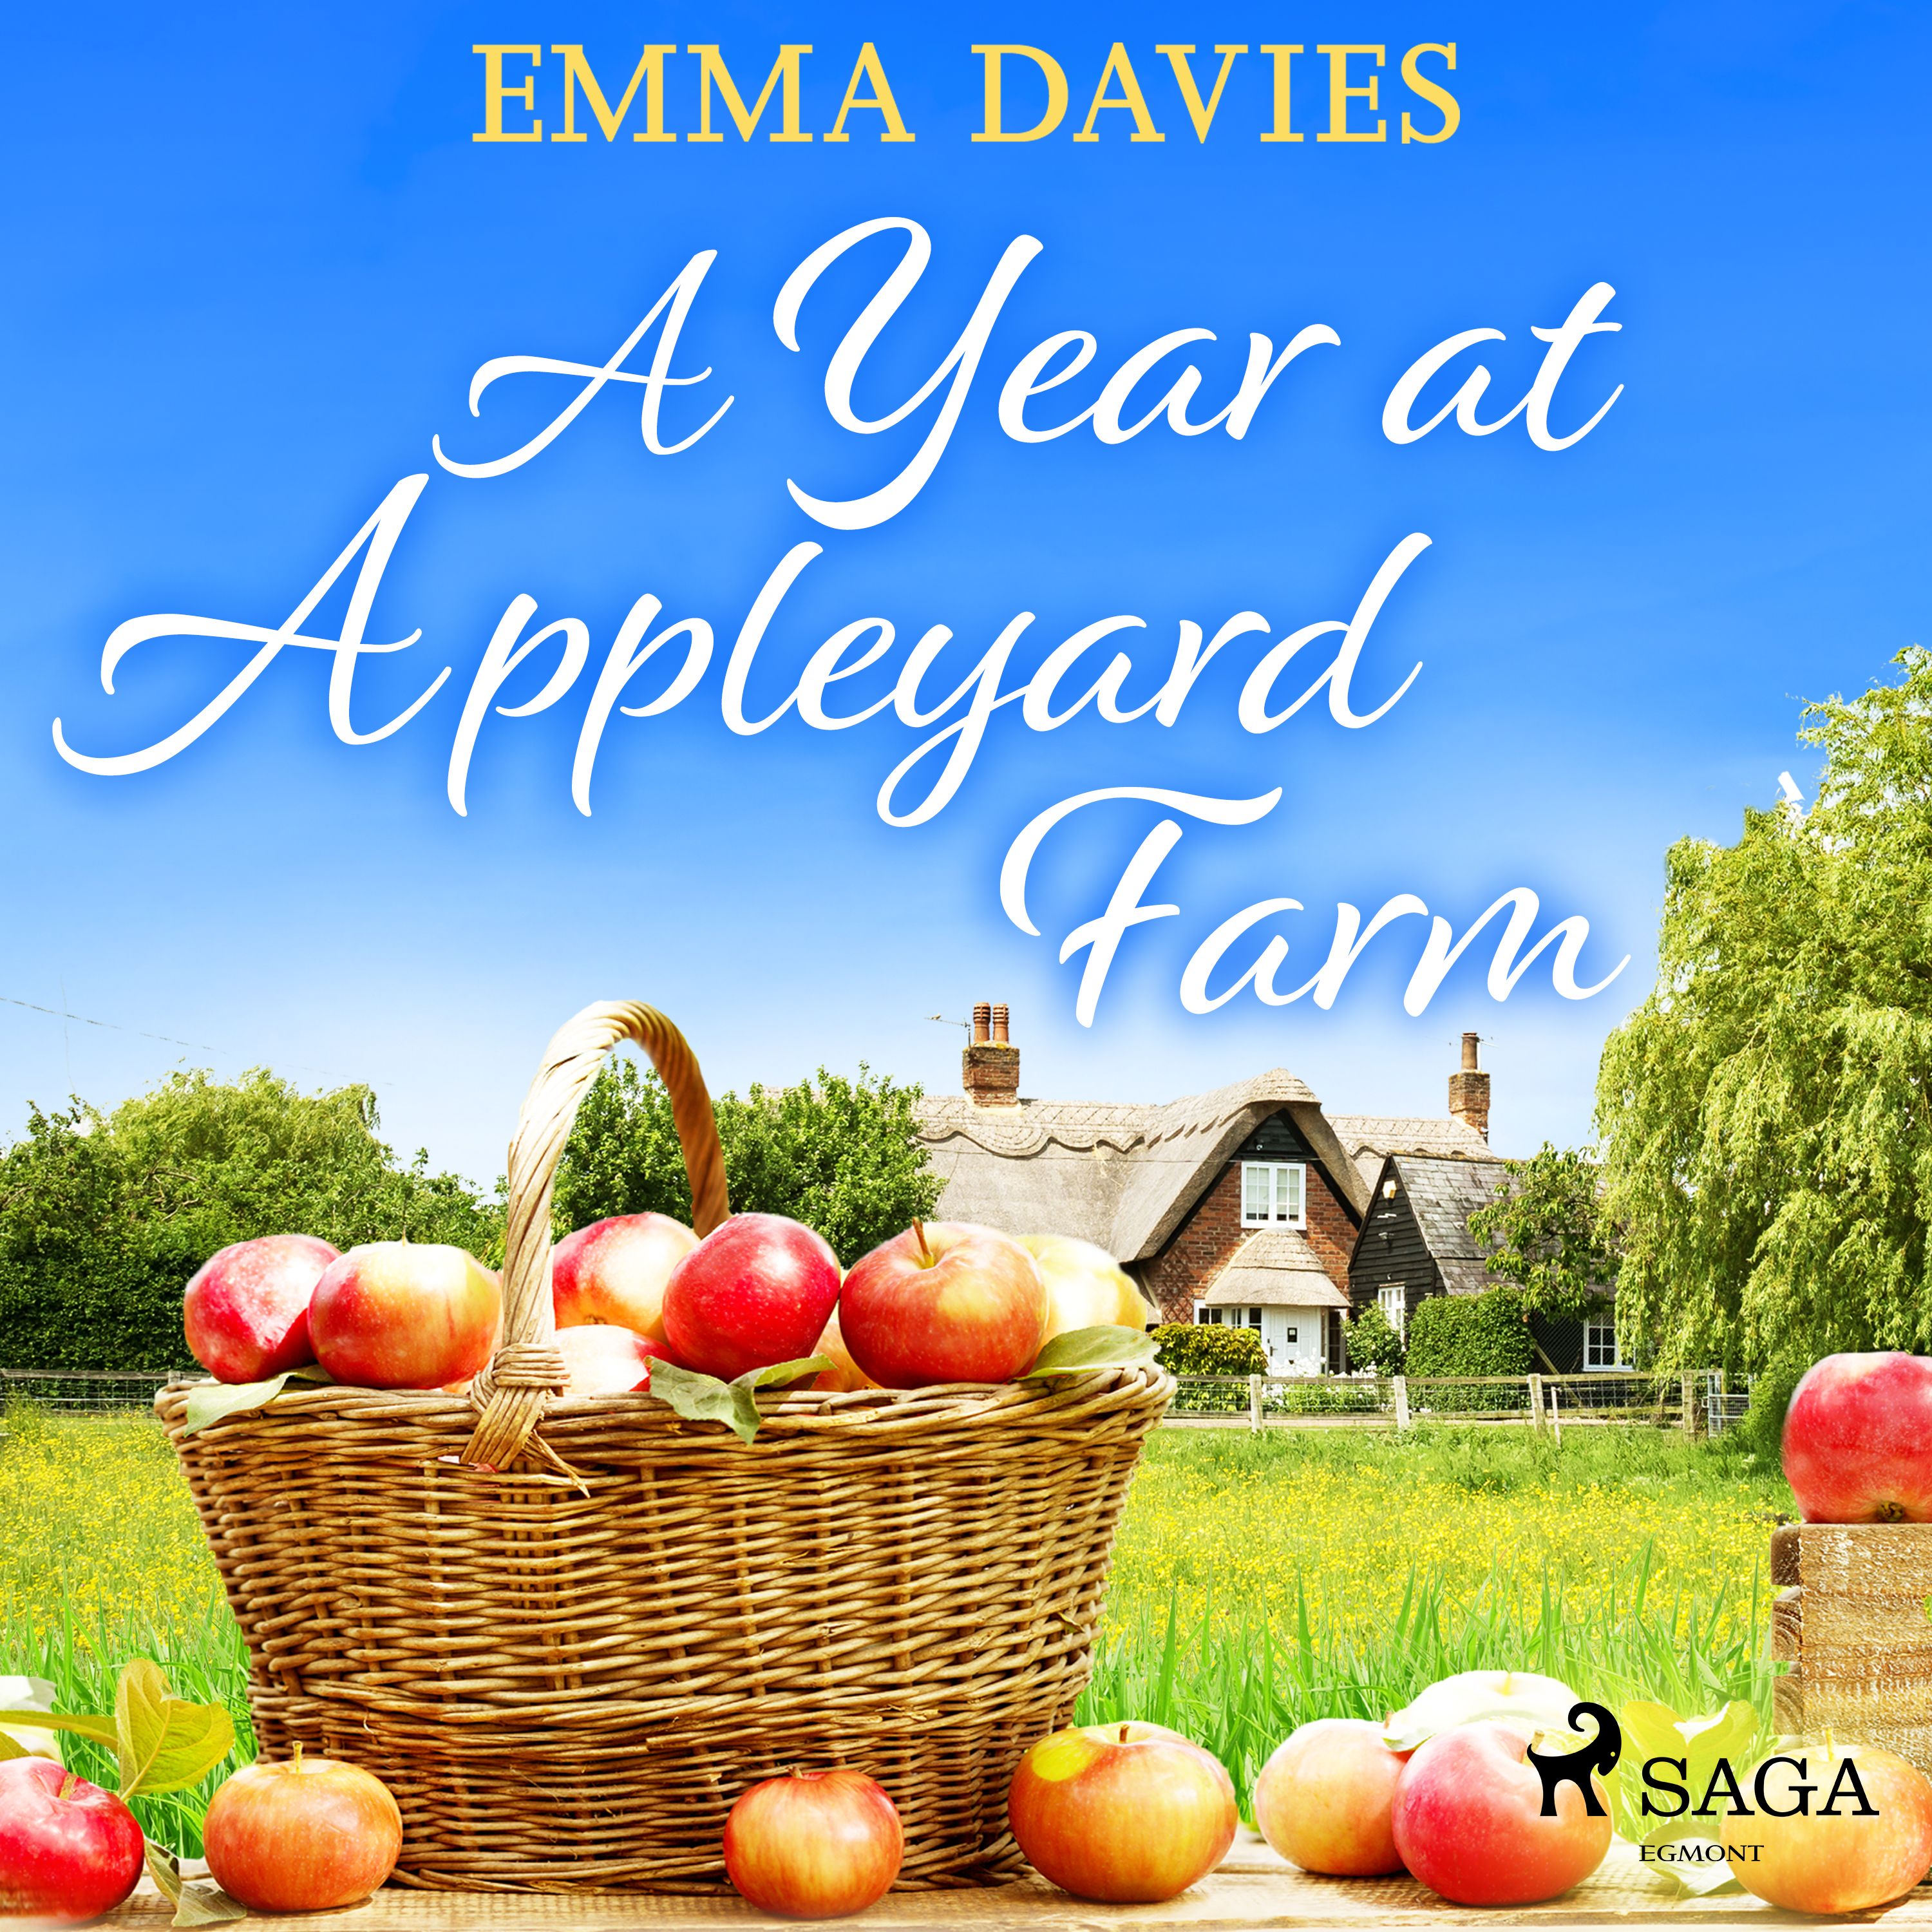 A Year at Appleyard Farm, ljudbok av Emma Davies